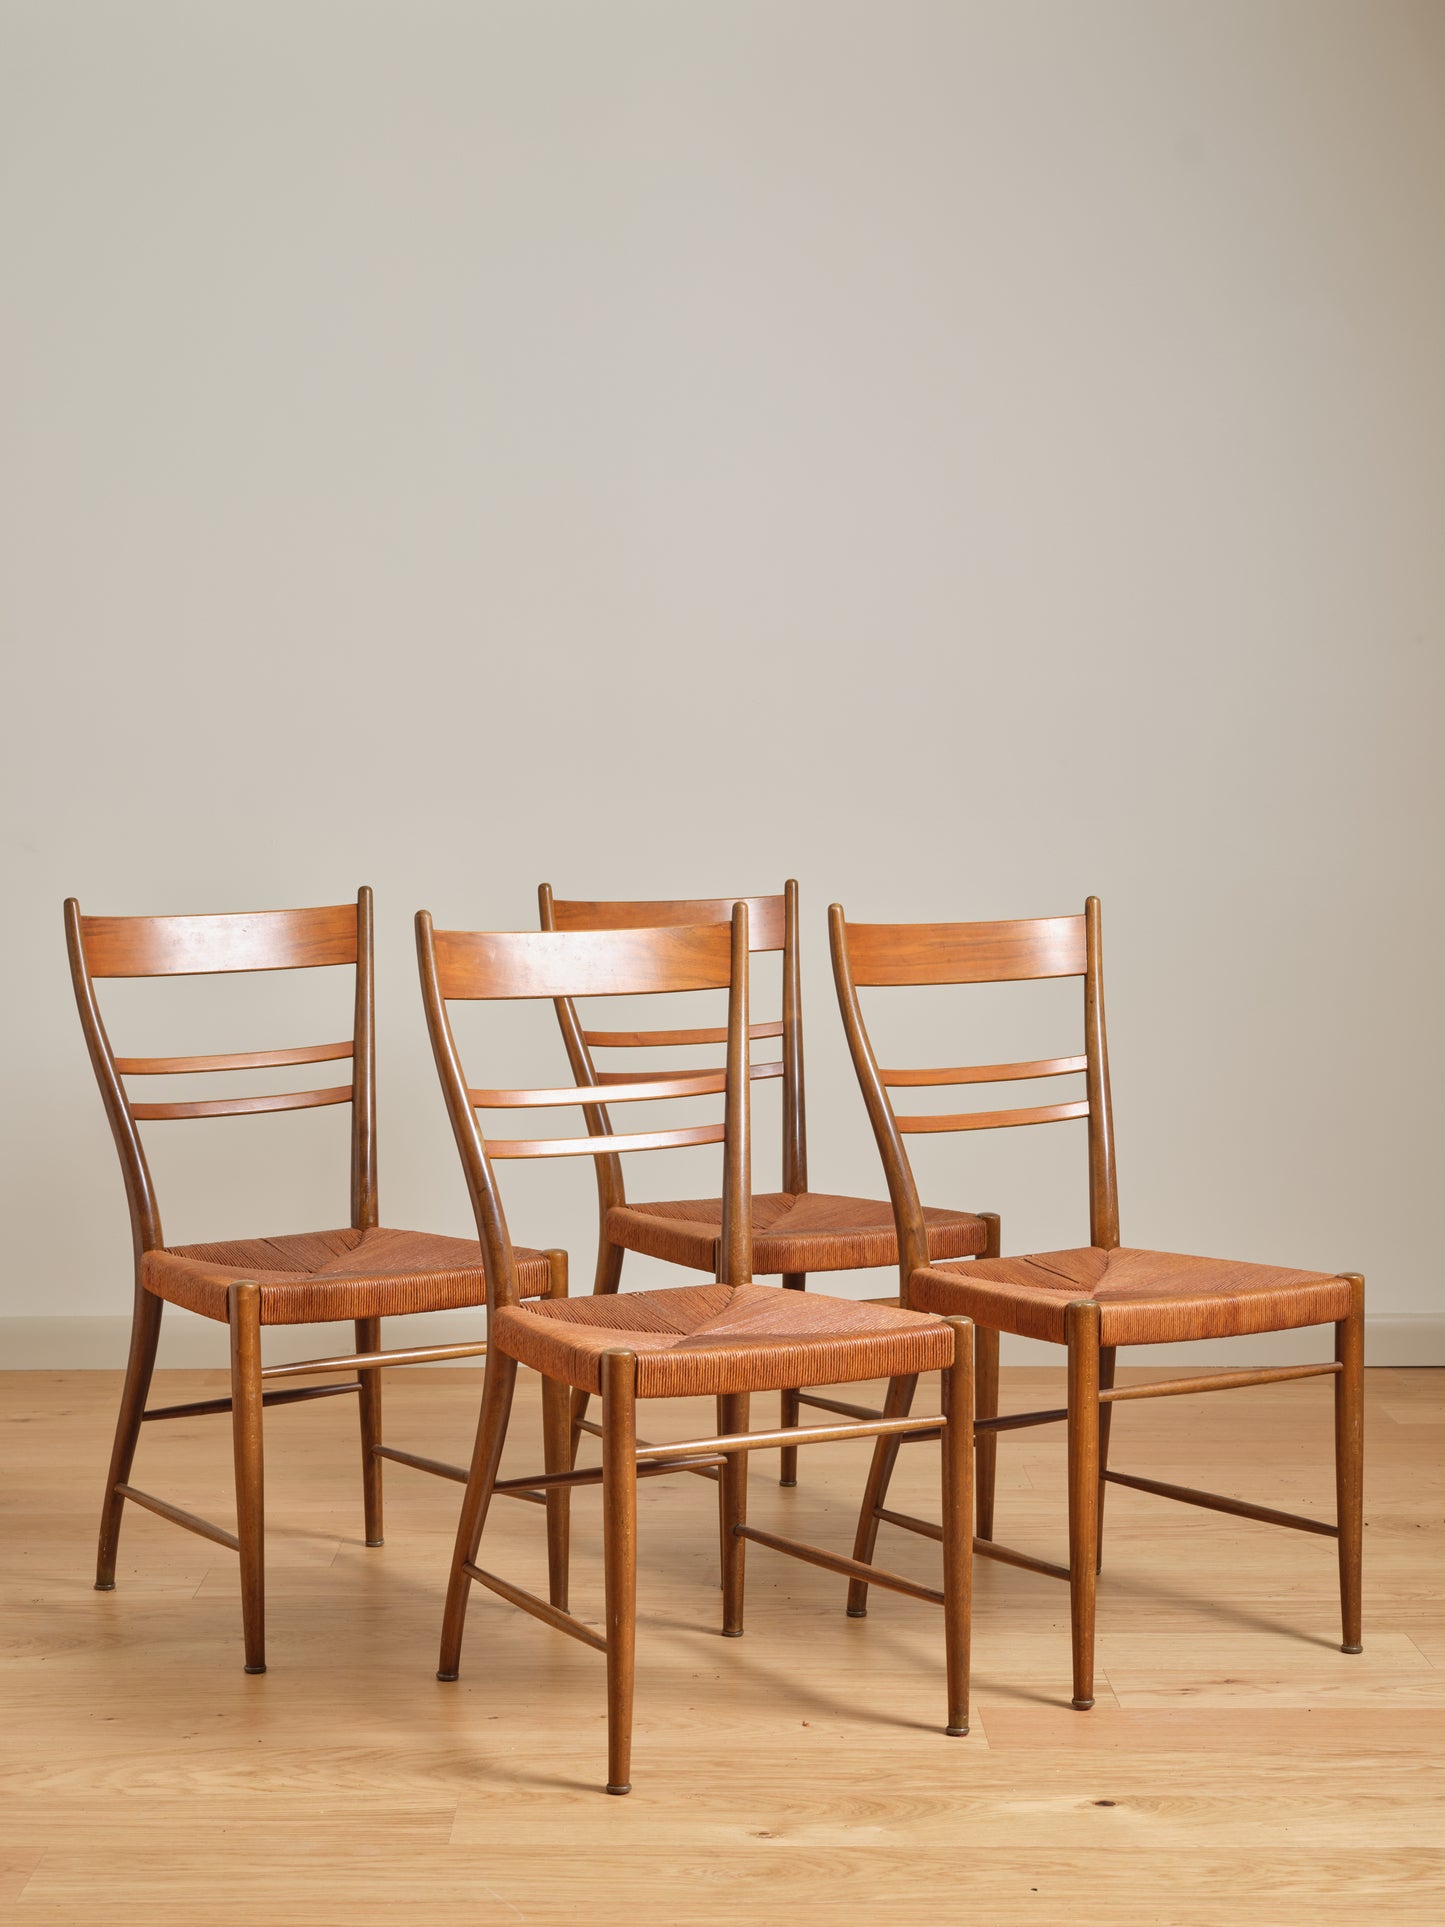 Set of 4 Danish Dining Chairs